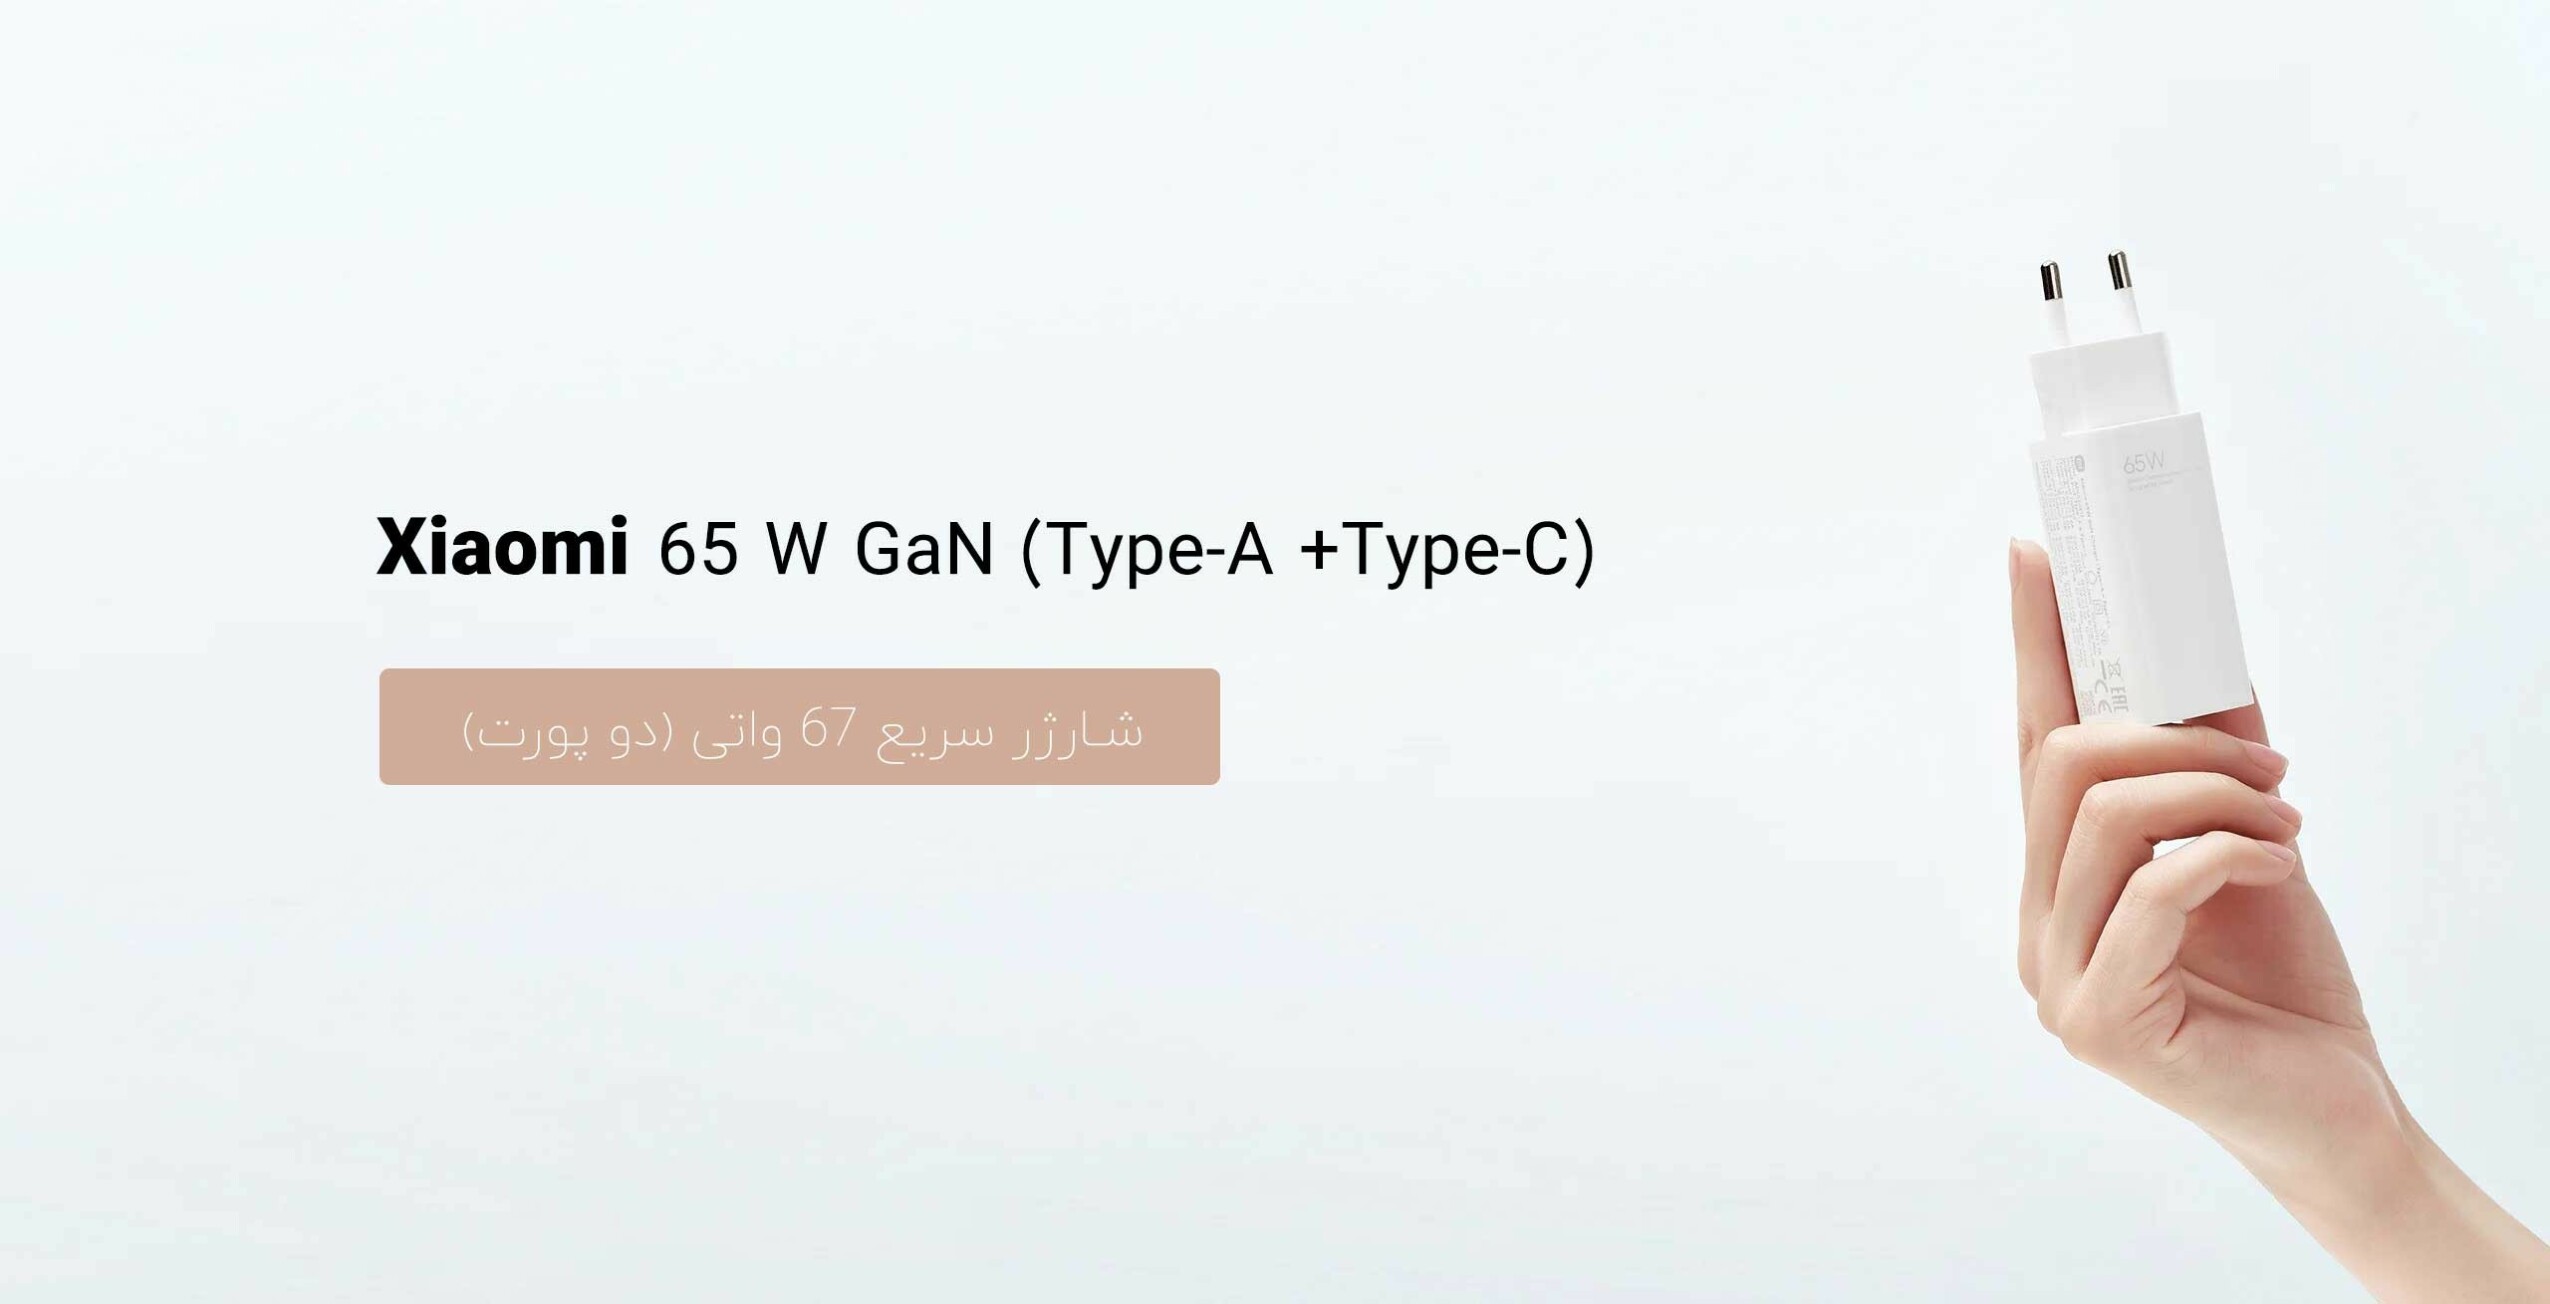 Xiaomi 65 W GaN (Type-A +Type-C) EU